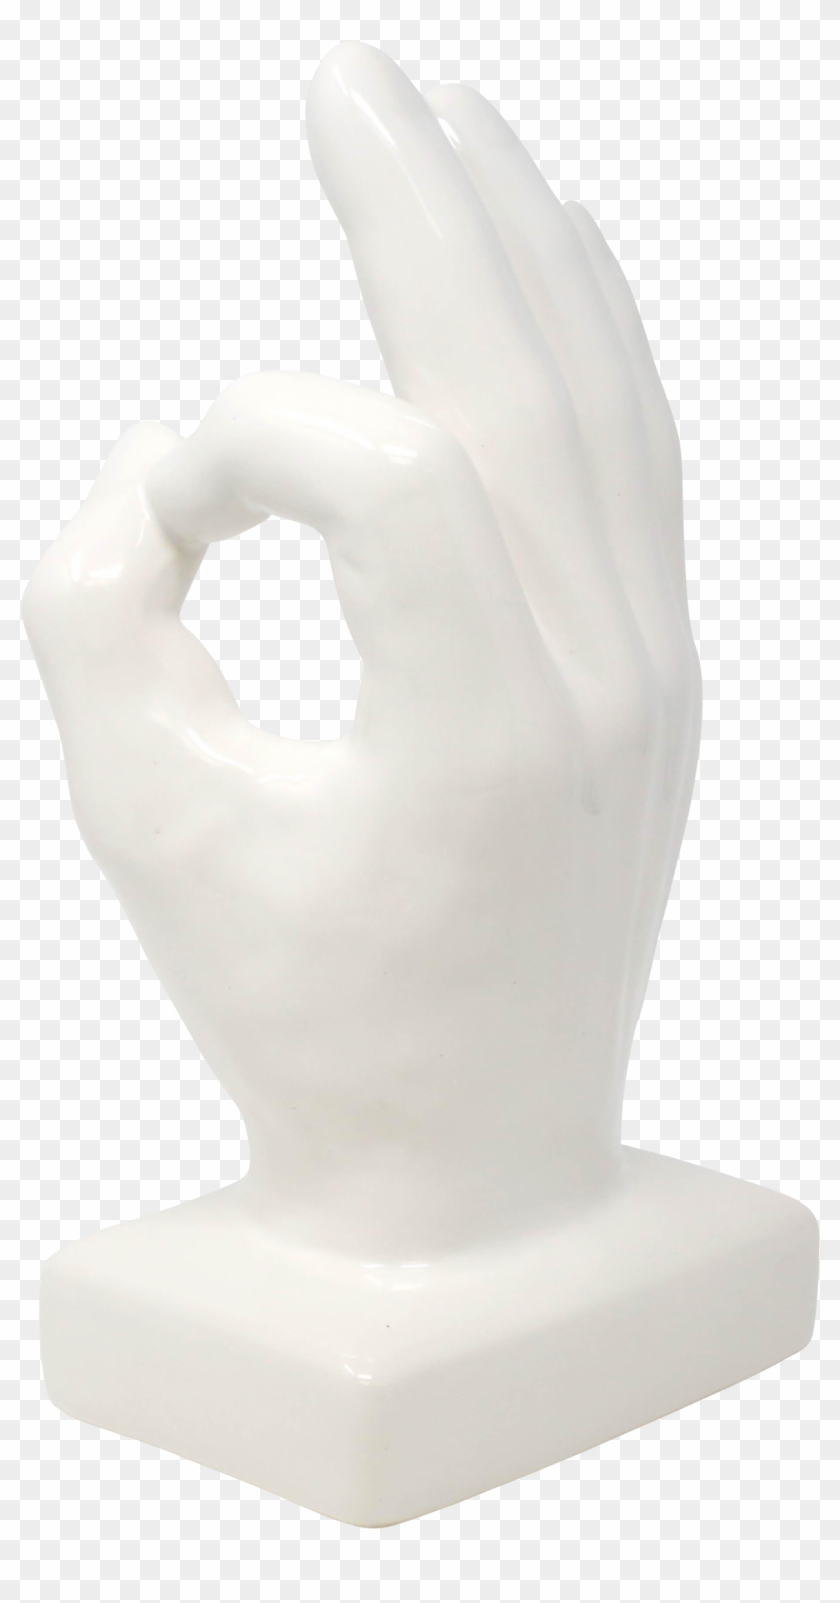 Oversized "ok" Ceramic Hand Model On Chairish - Statue Clipart #970654